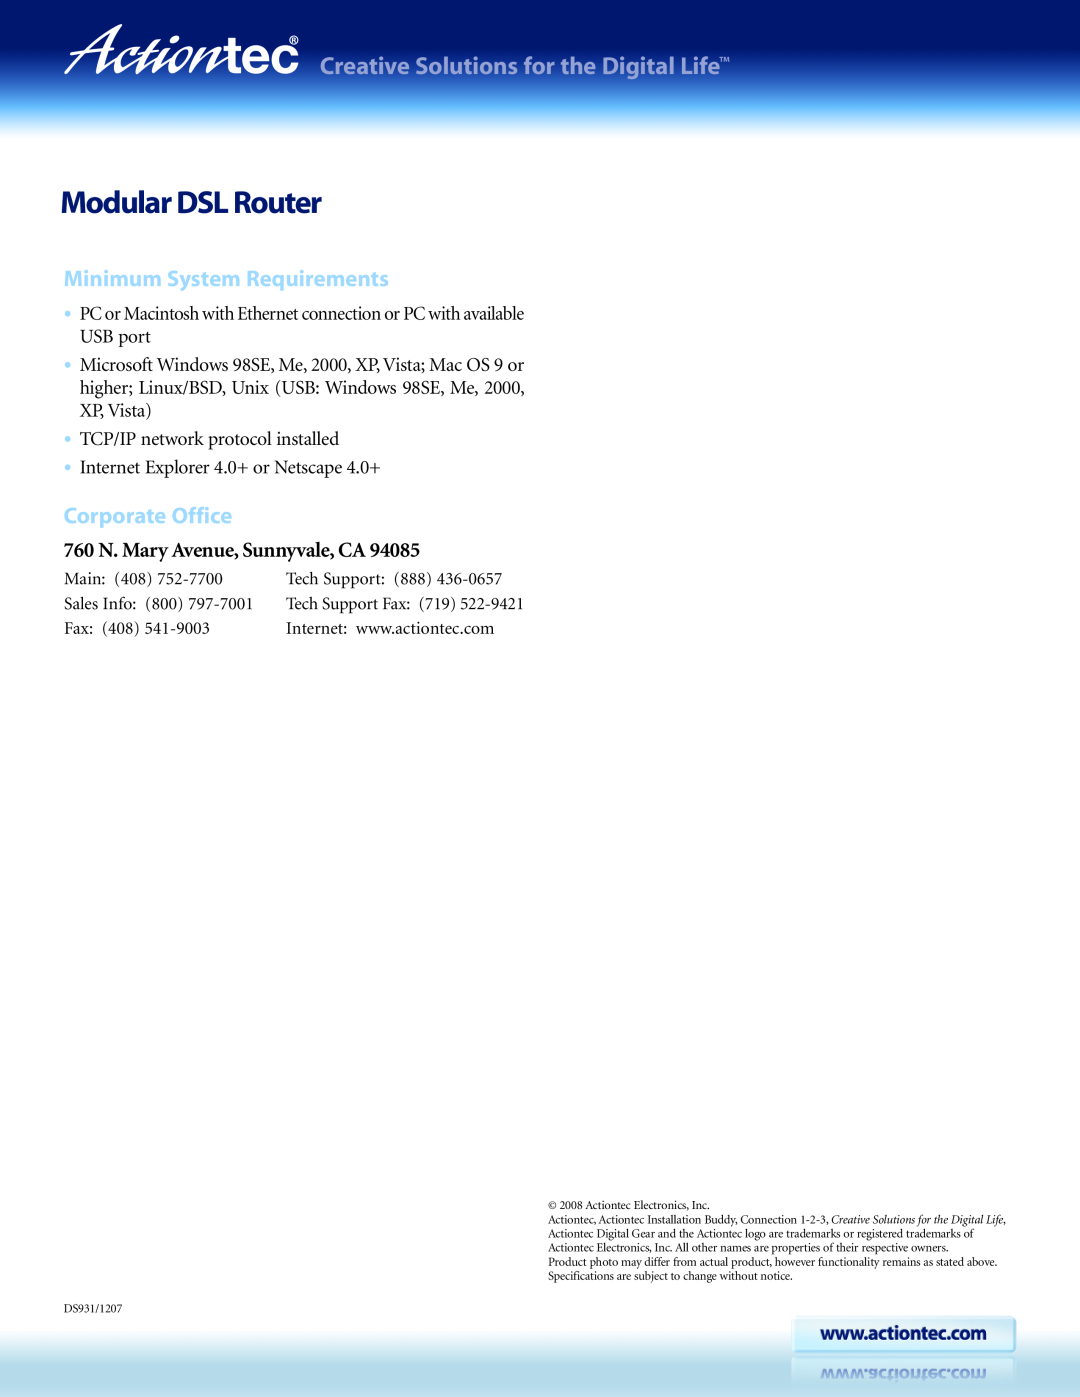 Actiontec electronic M1000 ModularDSLRouter, Minimum System Requirements, Corporate Office, Actiontec Electronics, Inc 